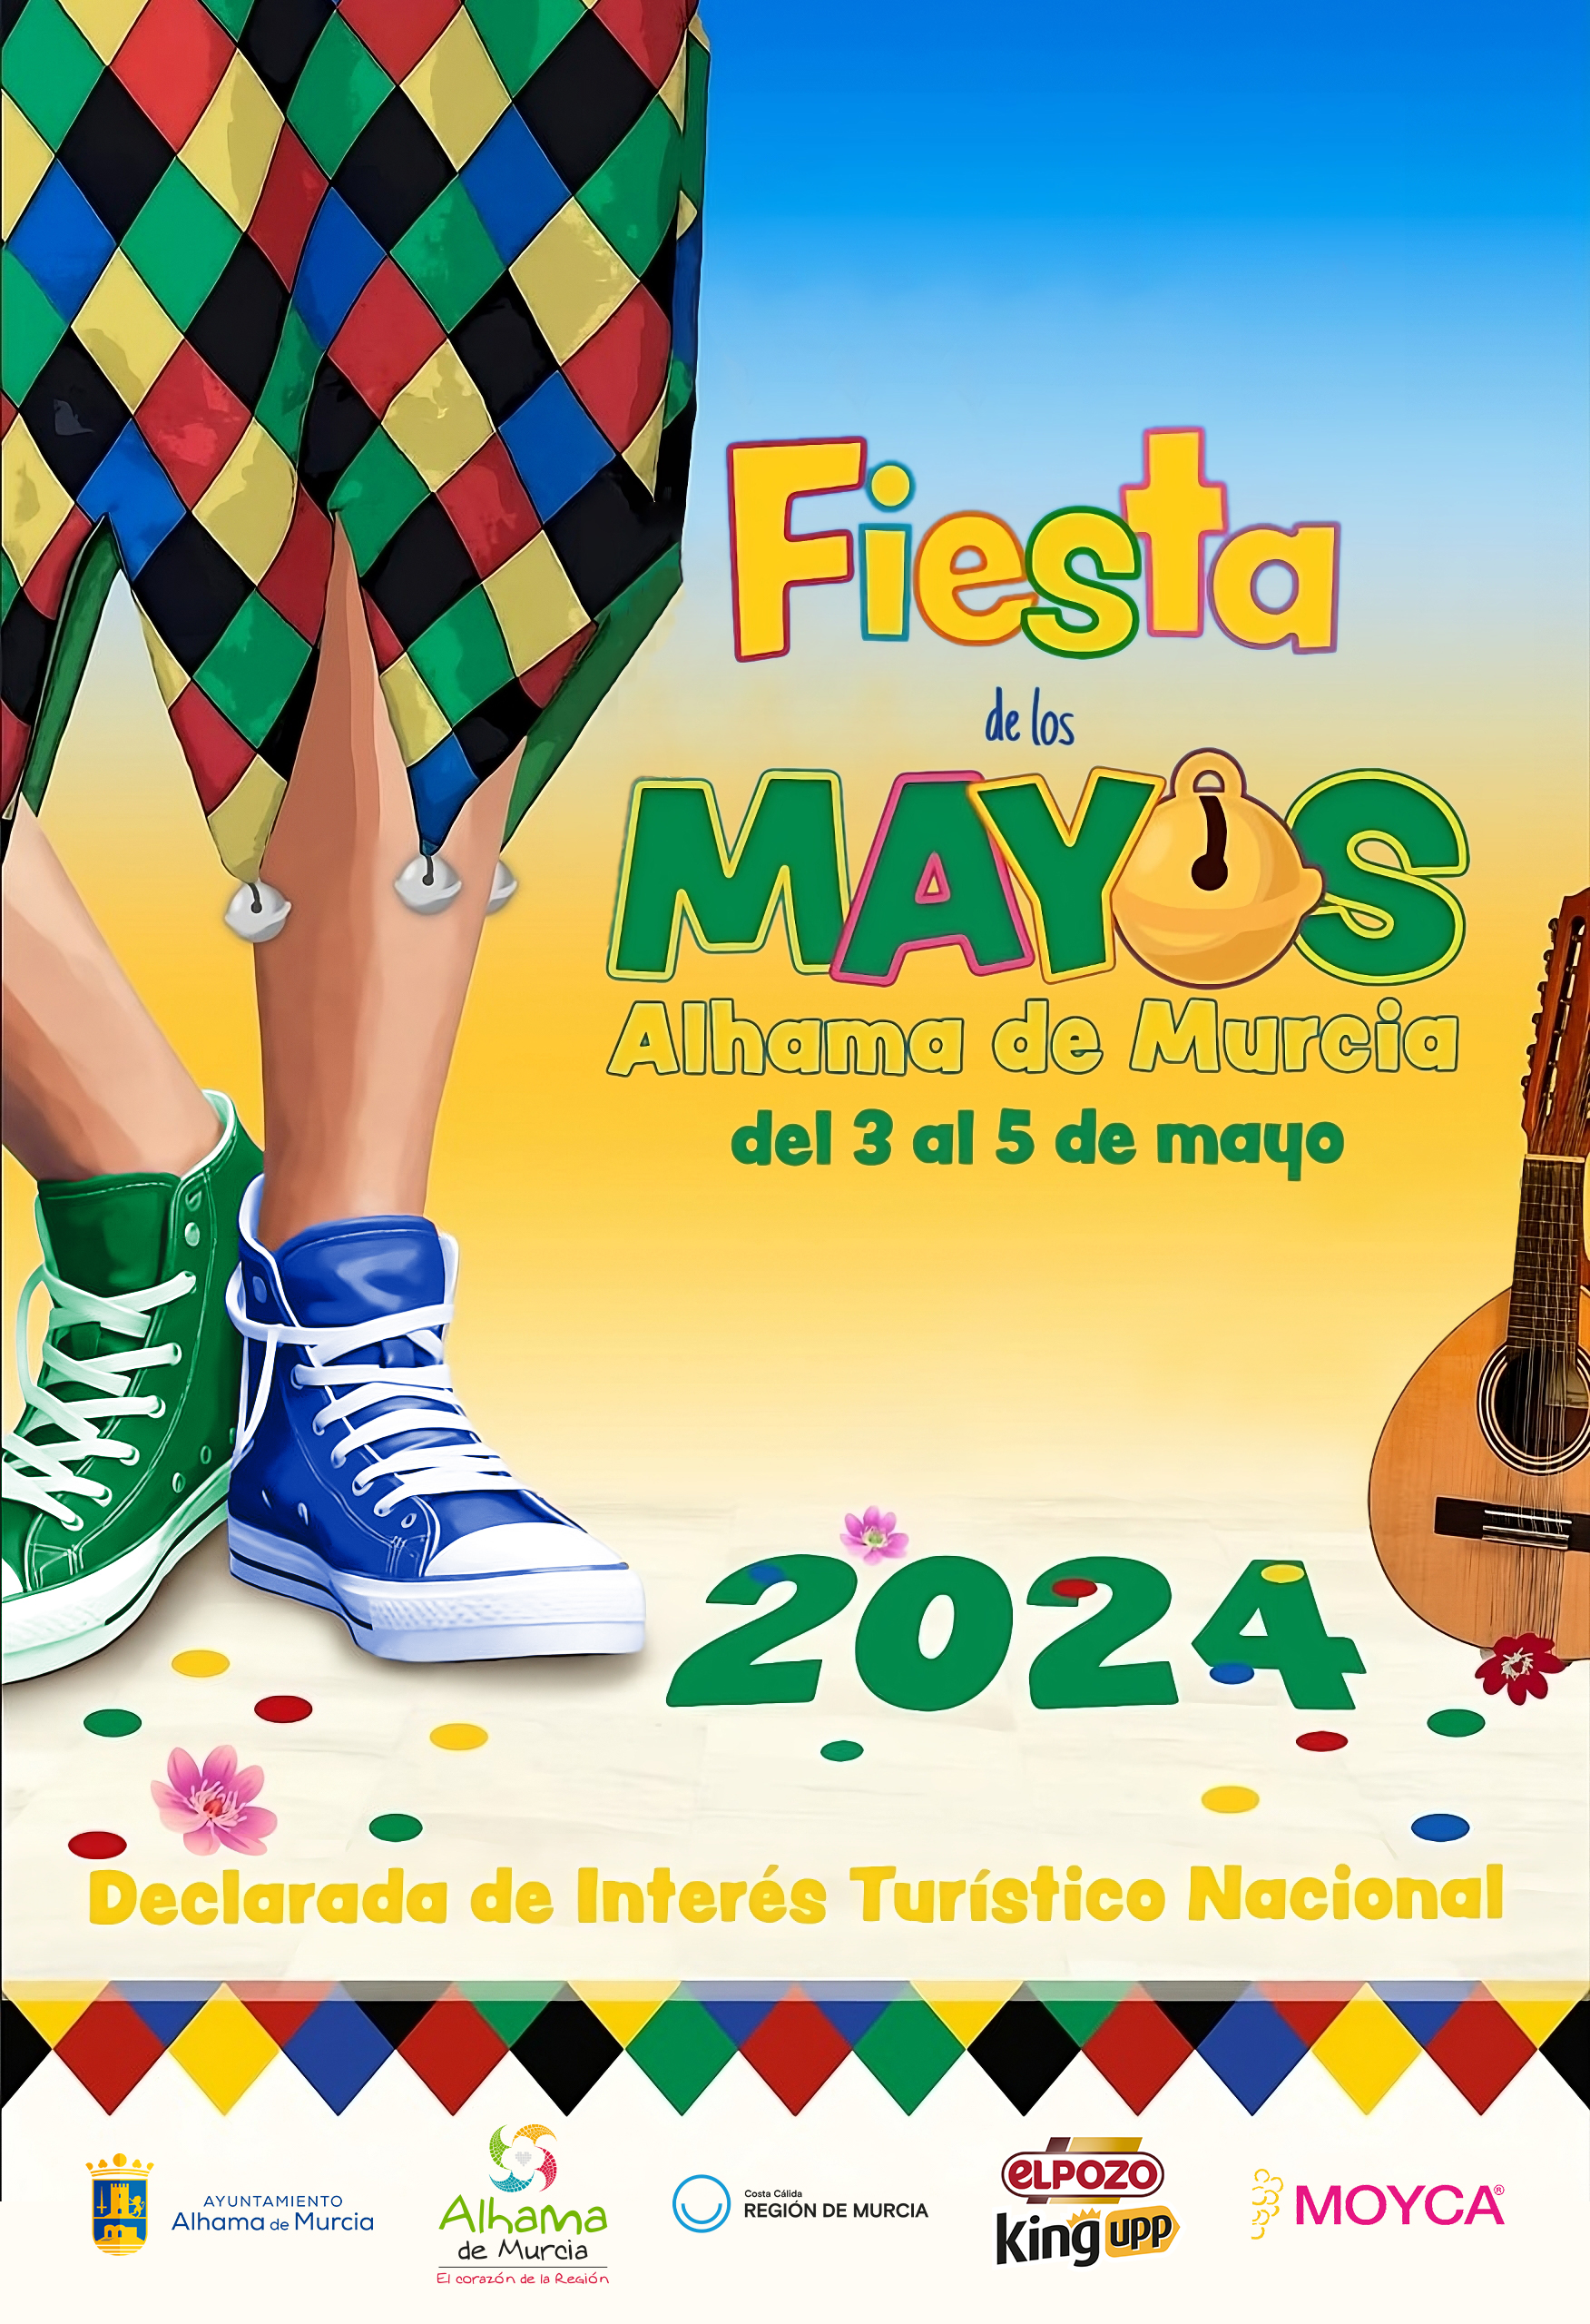 https://turismo.alhamademurcia.es/descargas/48s-folleto-fiesta-mayos-2024-ingles-imprimir.pdf